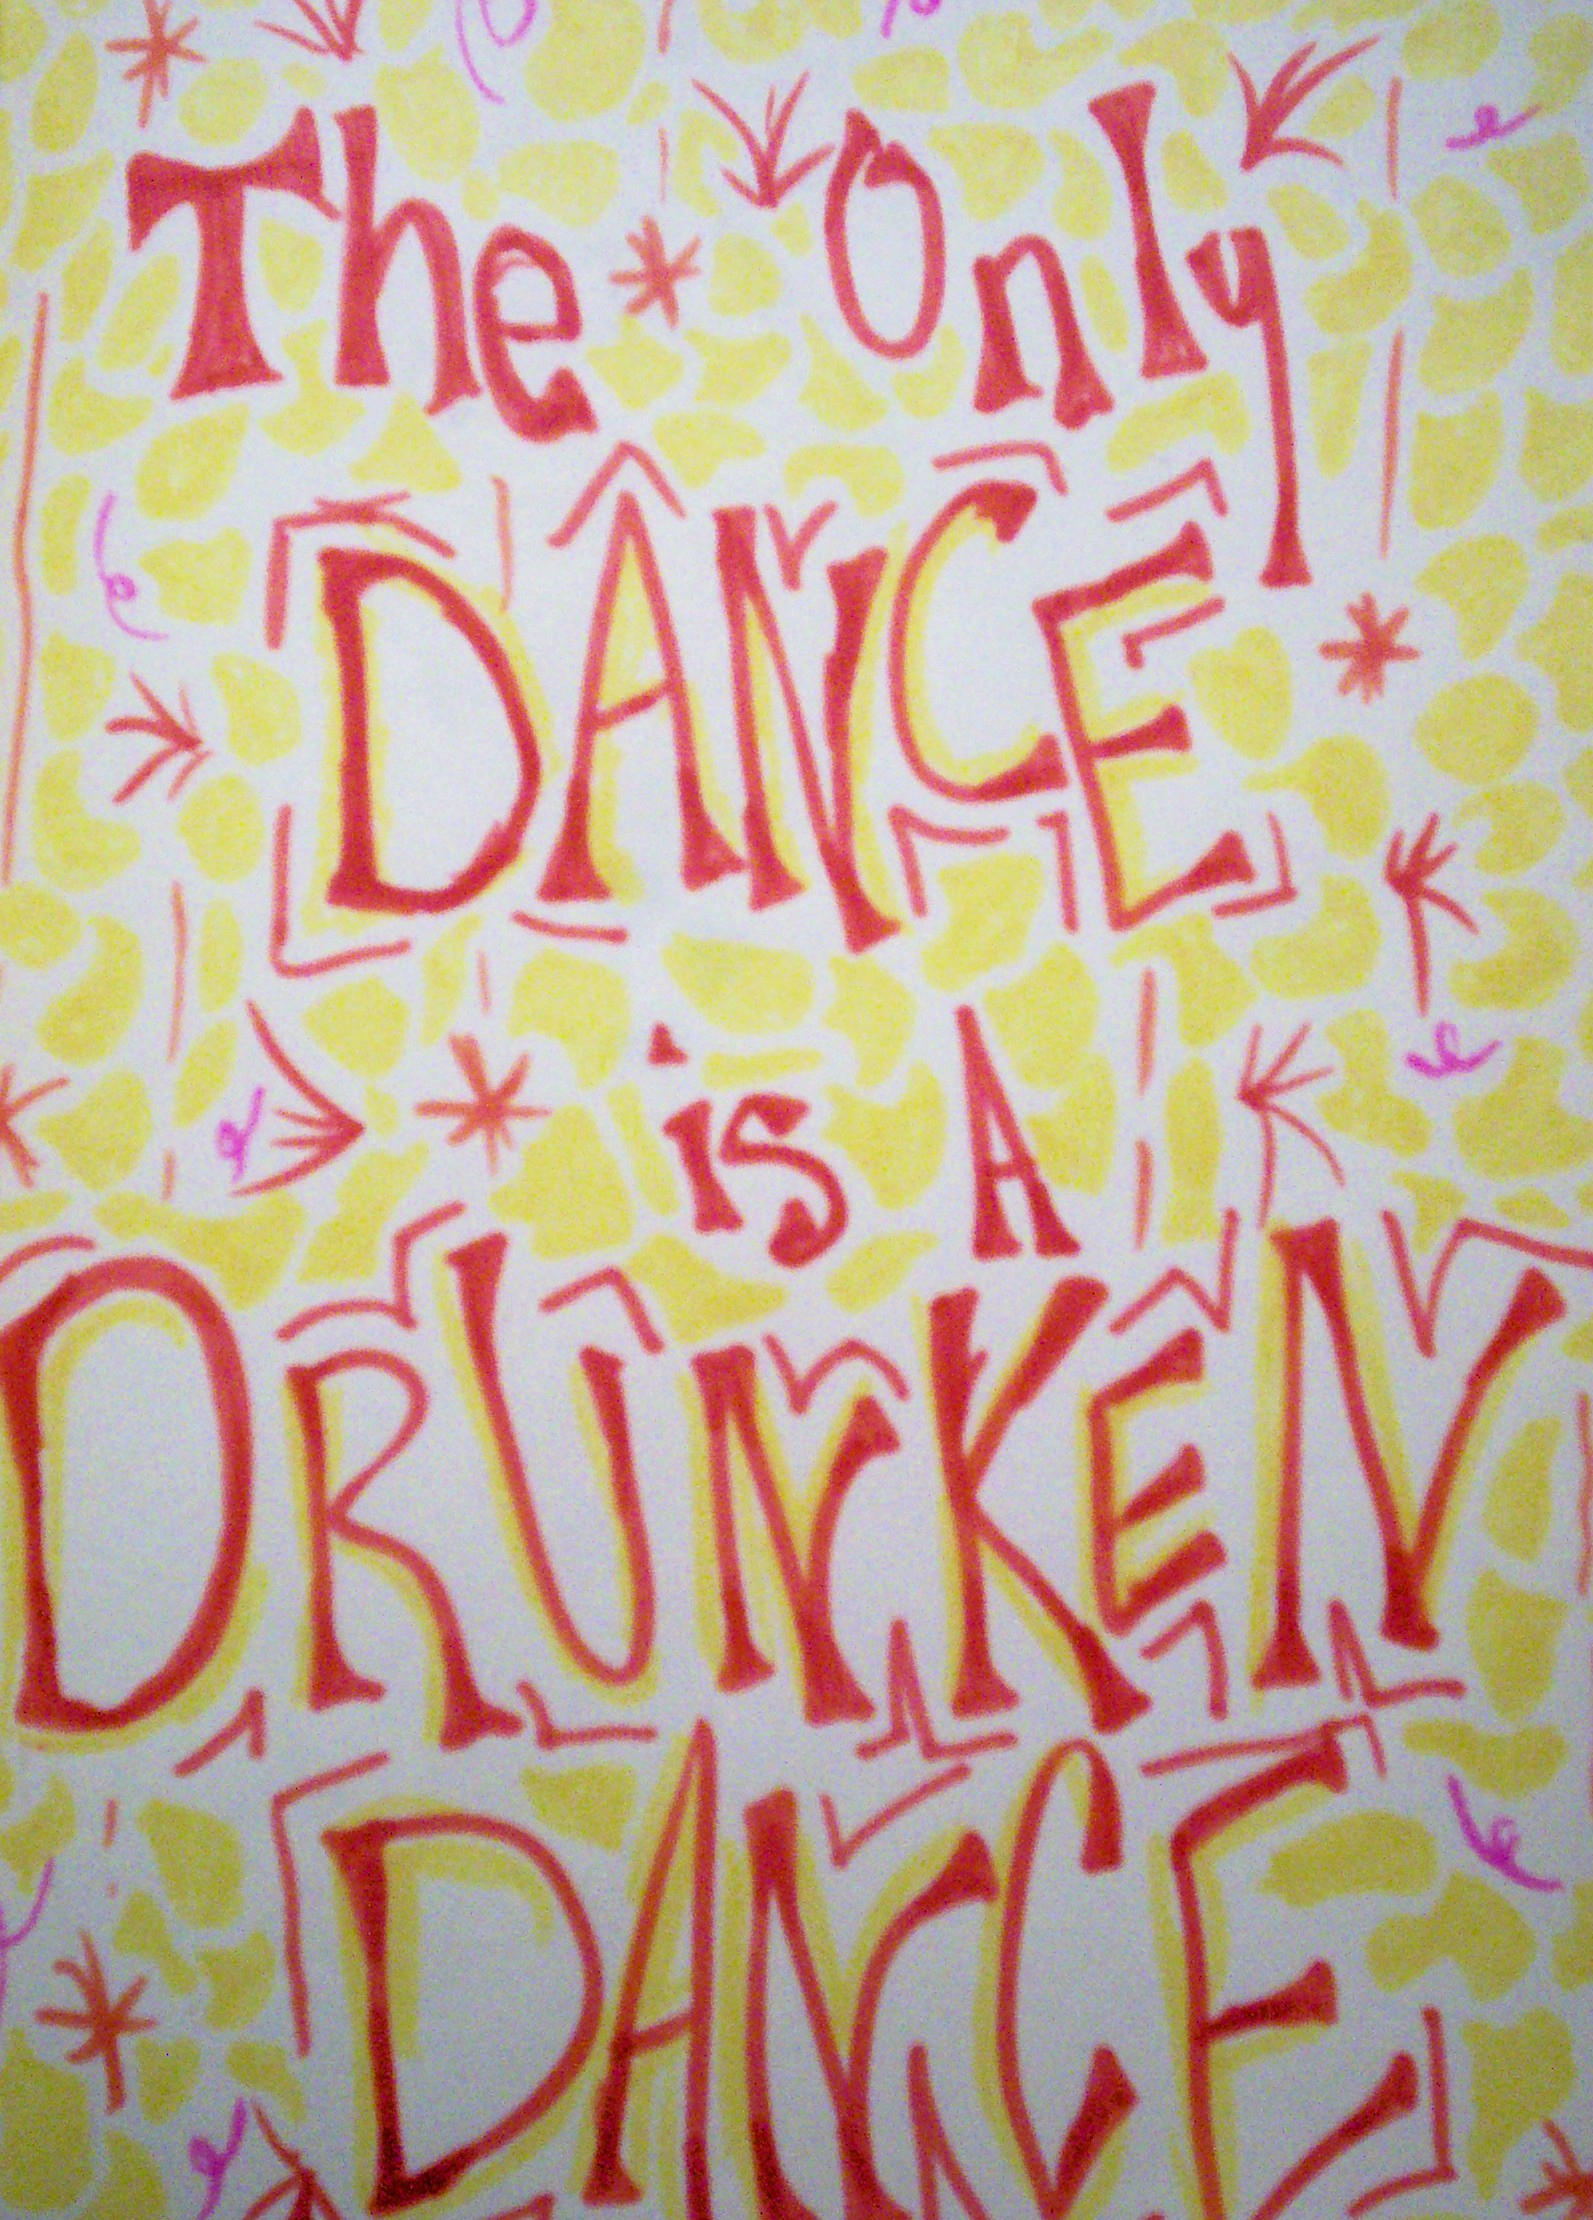 Drunken Dances...Are It by Delayed_Reaction